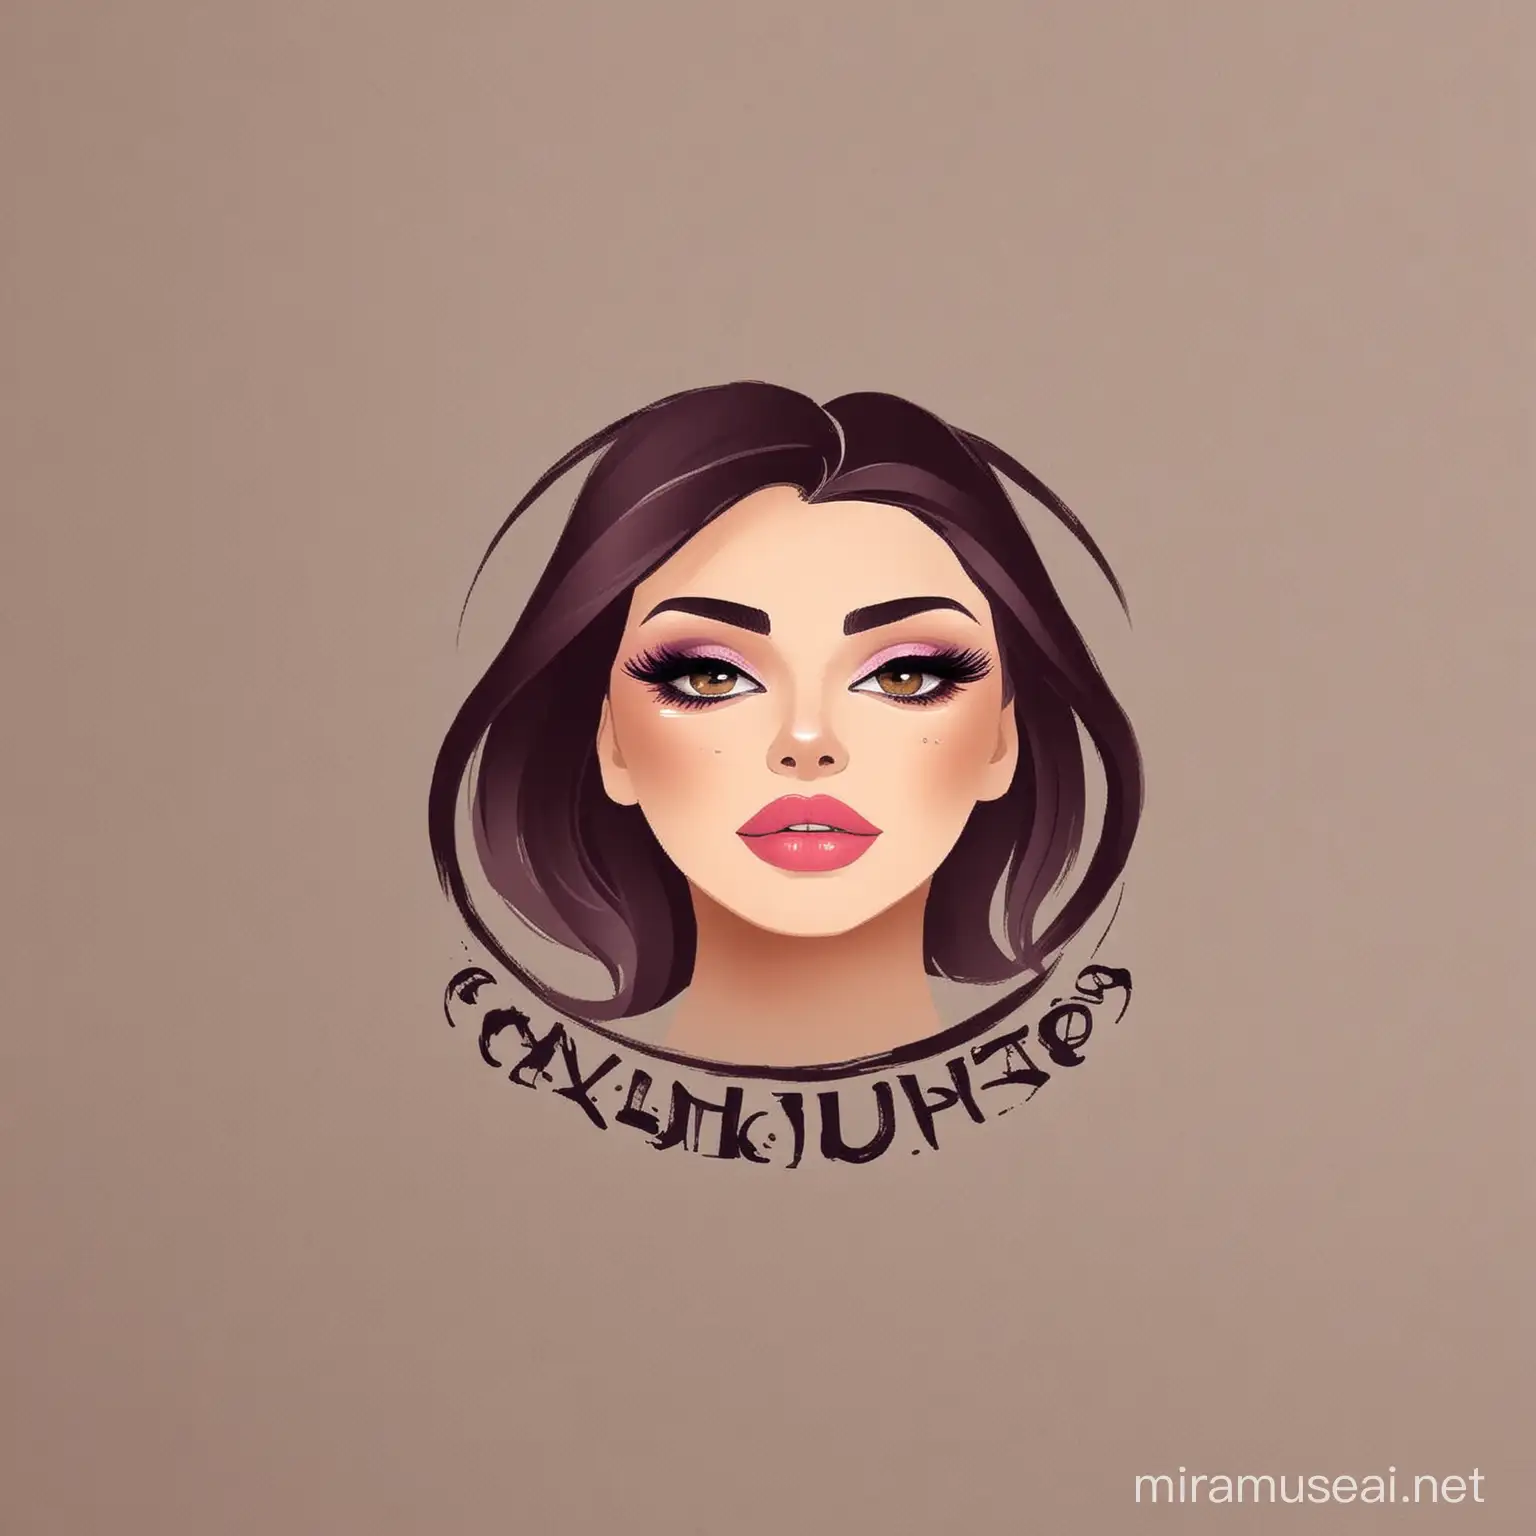 create a logo for makeup website
